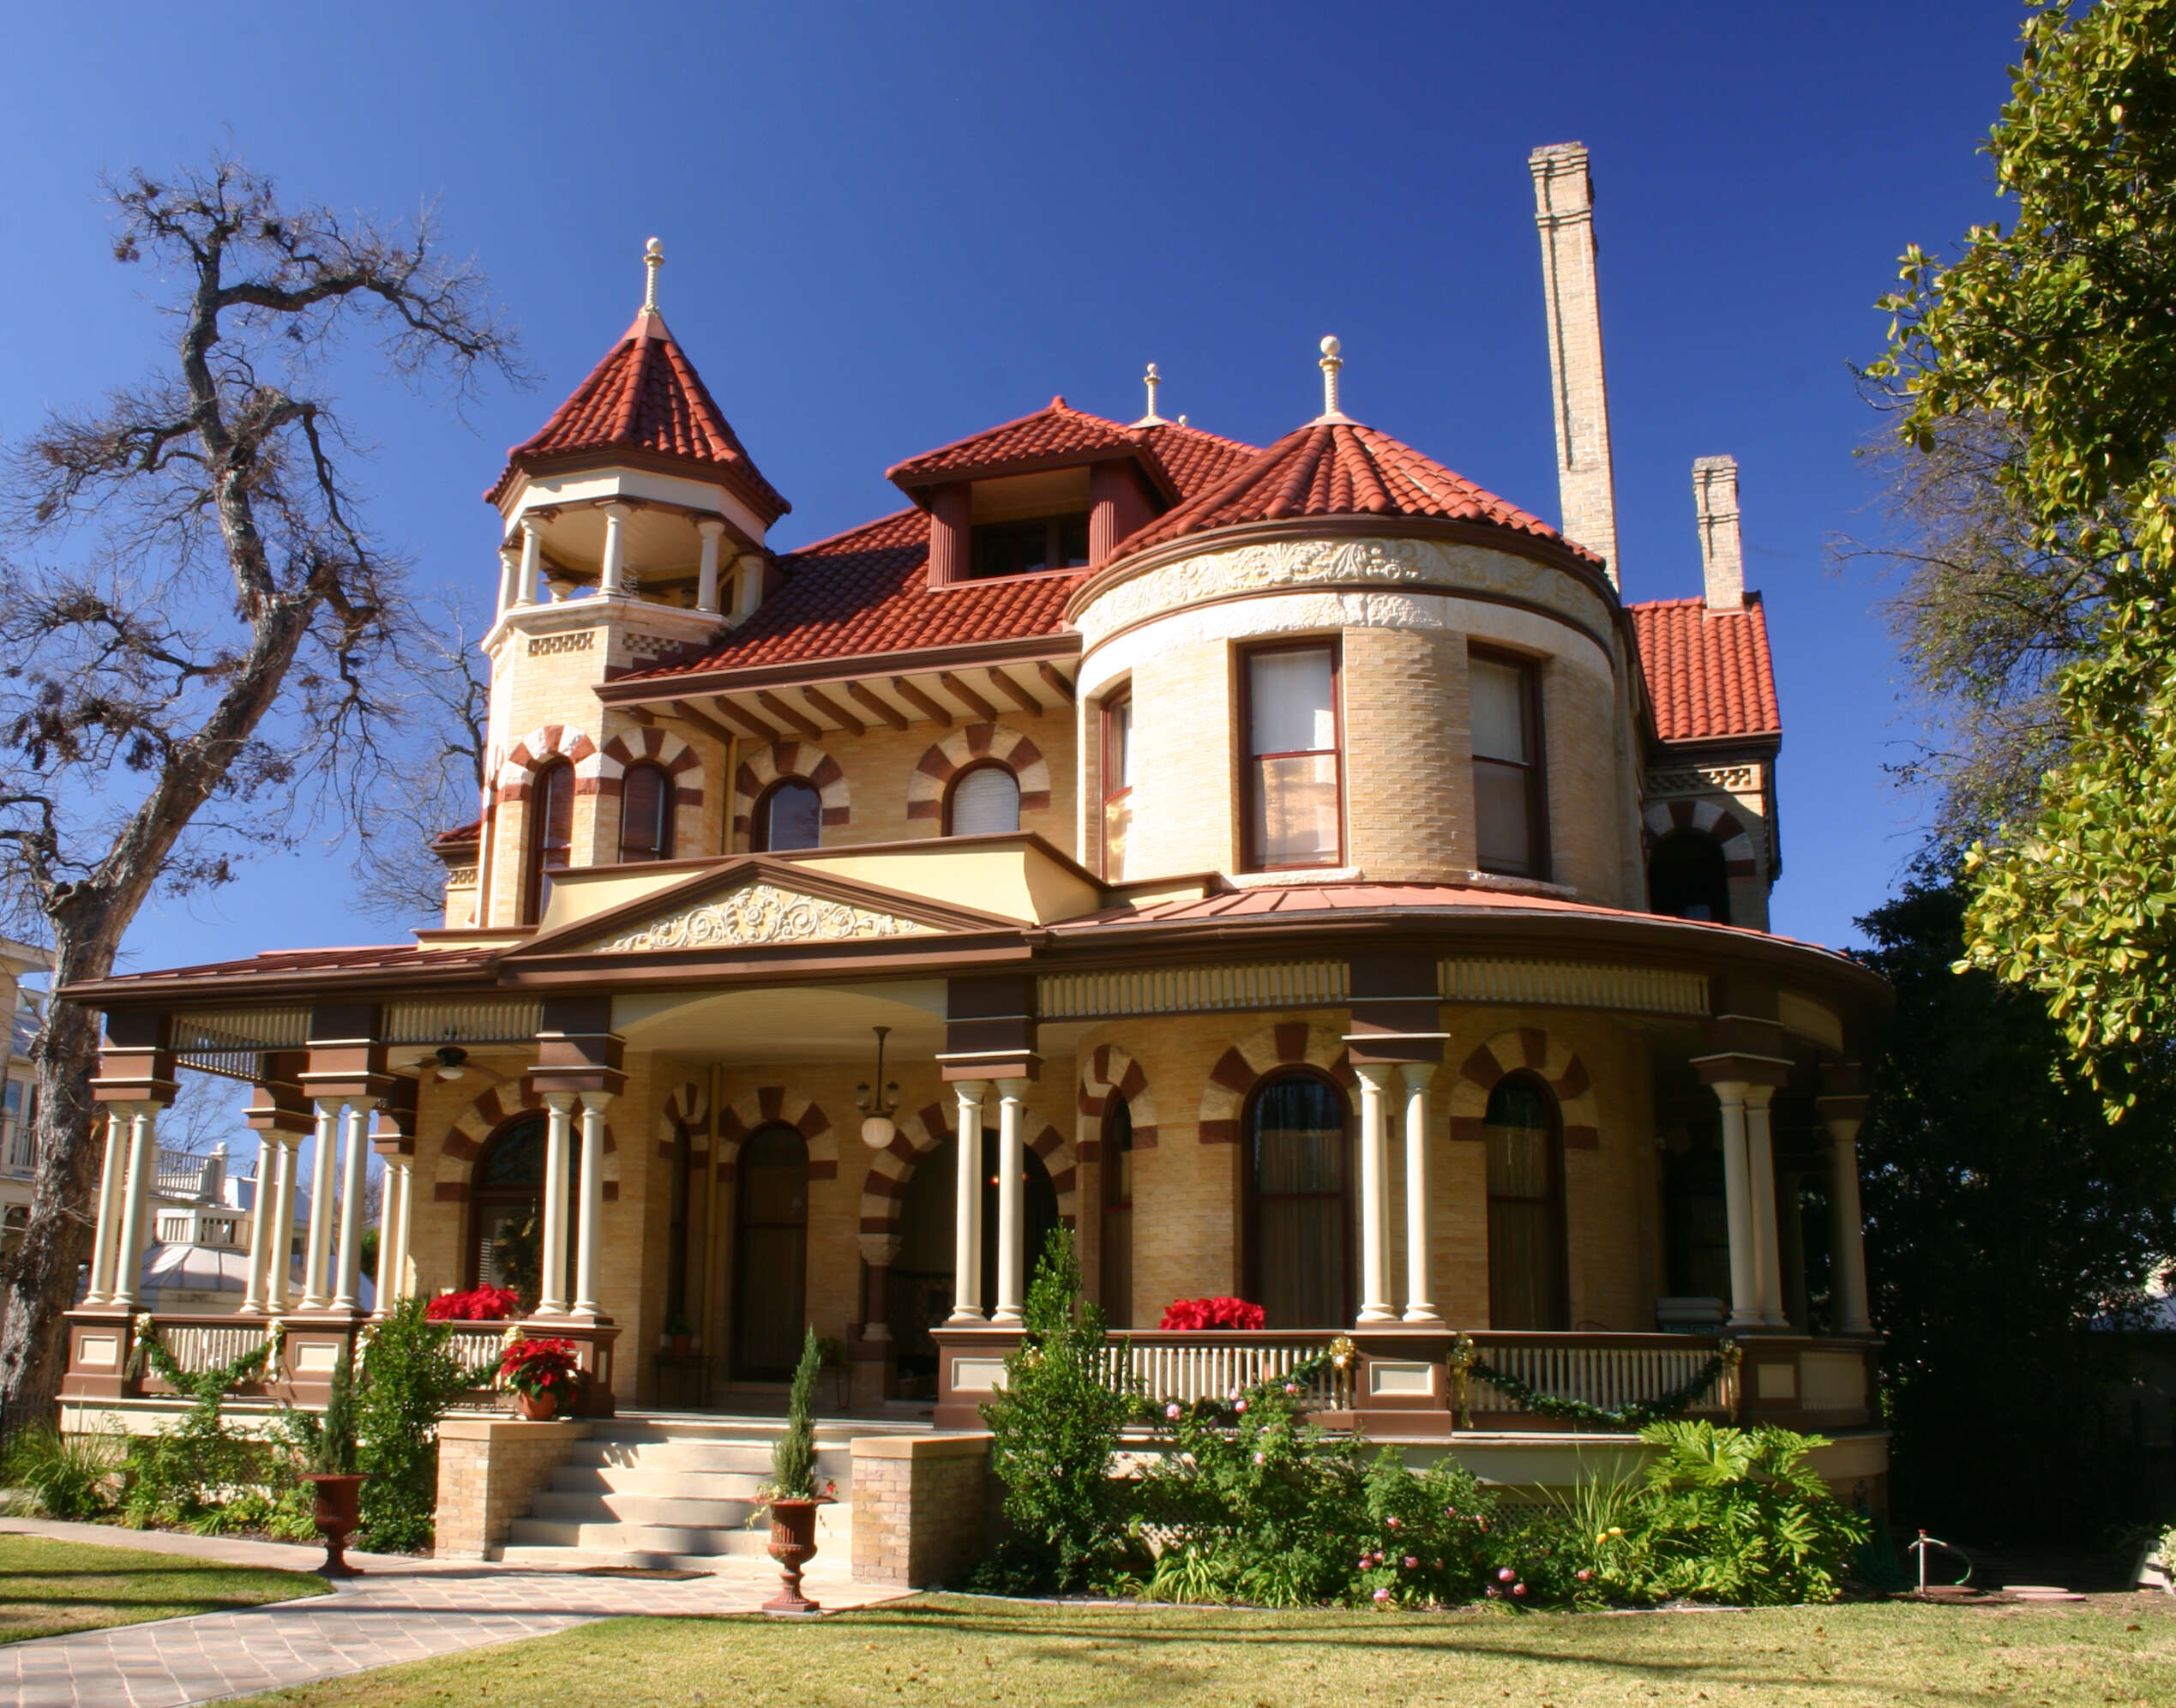 King William historic district, San Antonio